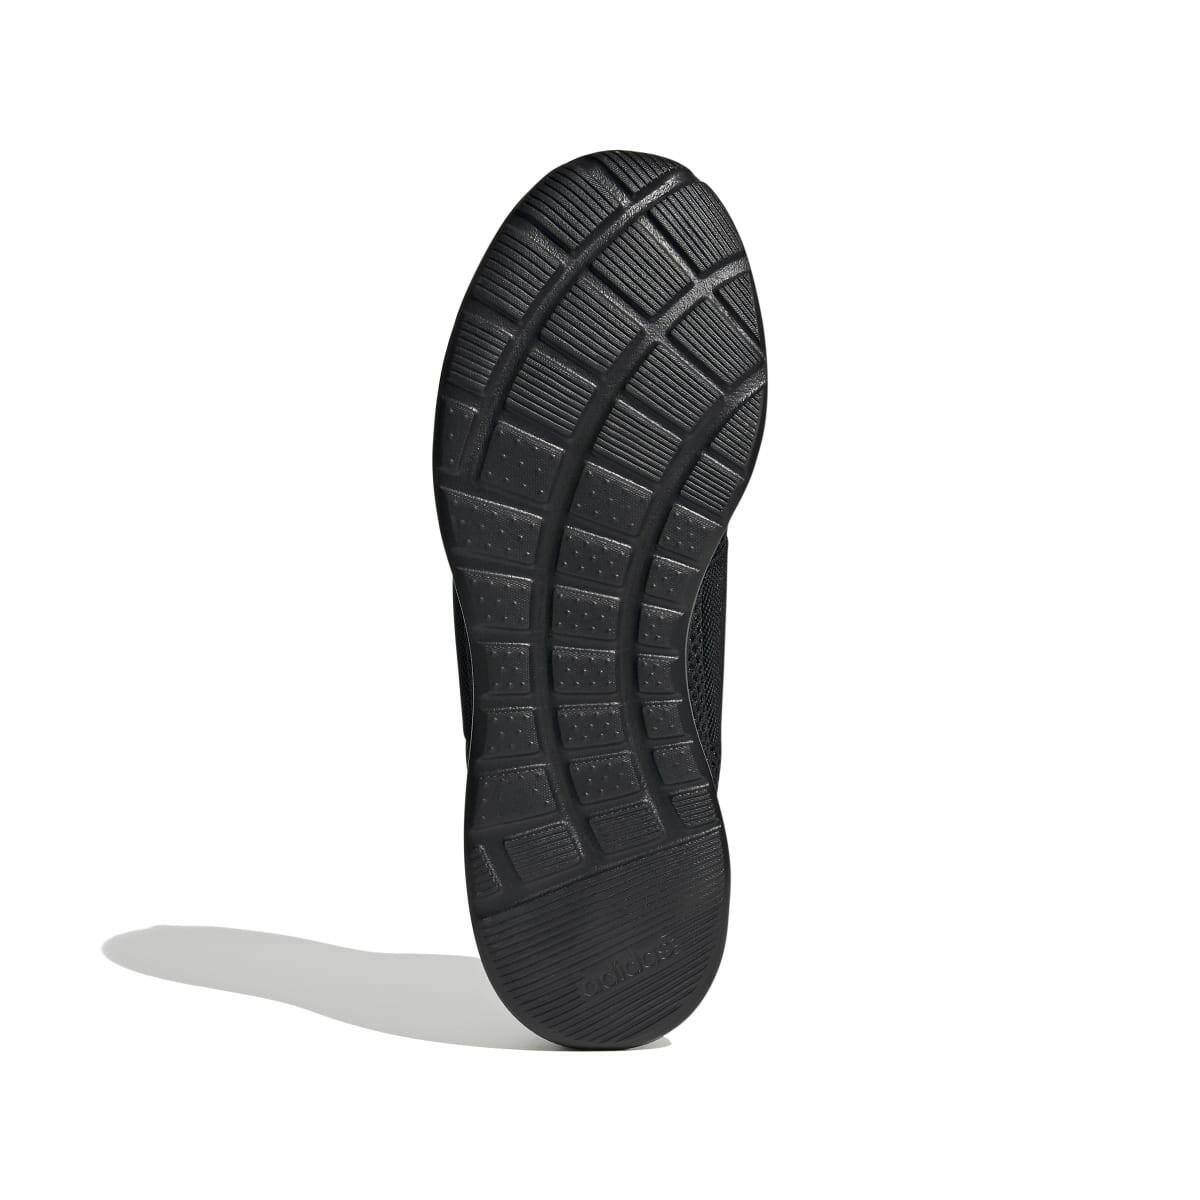 ADIDAS H04296 LITE RACER ADAPT 4.0 MN'S (Medium) Black/Black/Black Mesh Running Shoes - GENUINE AUTHENTIC BRAND LLC  